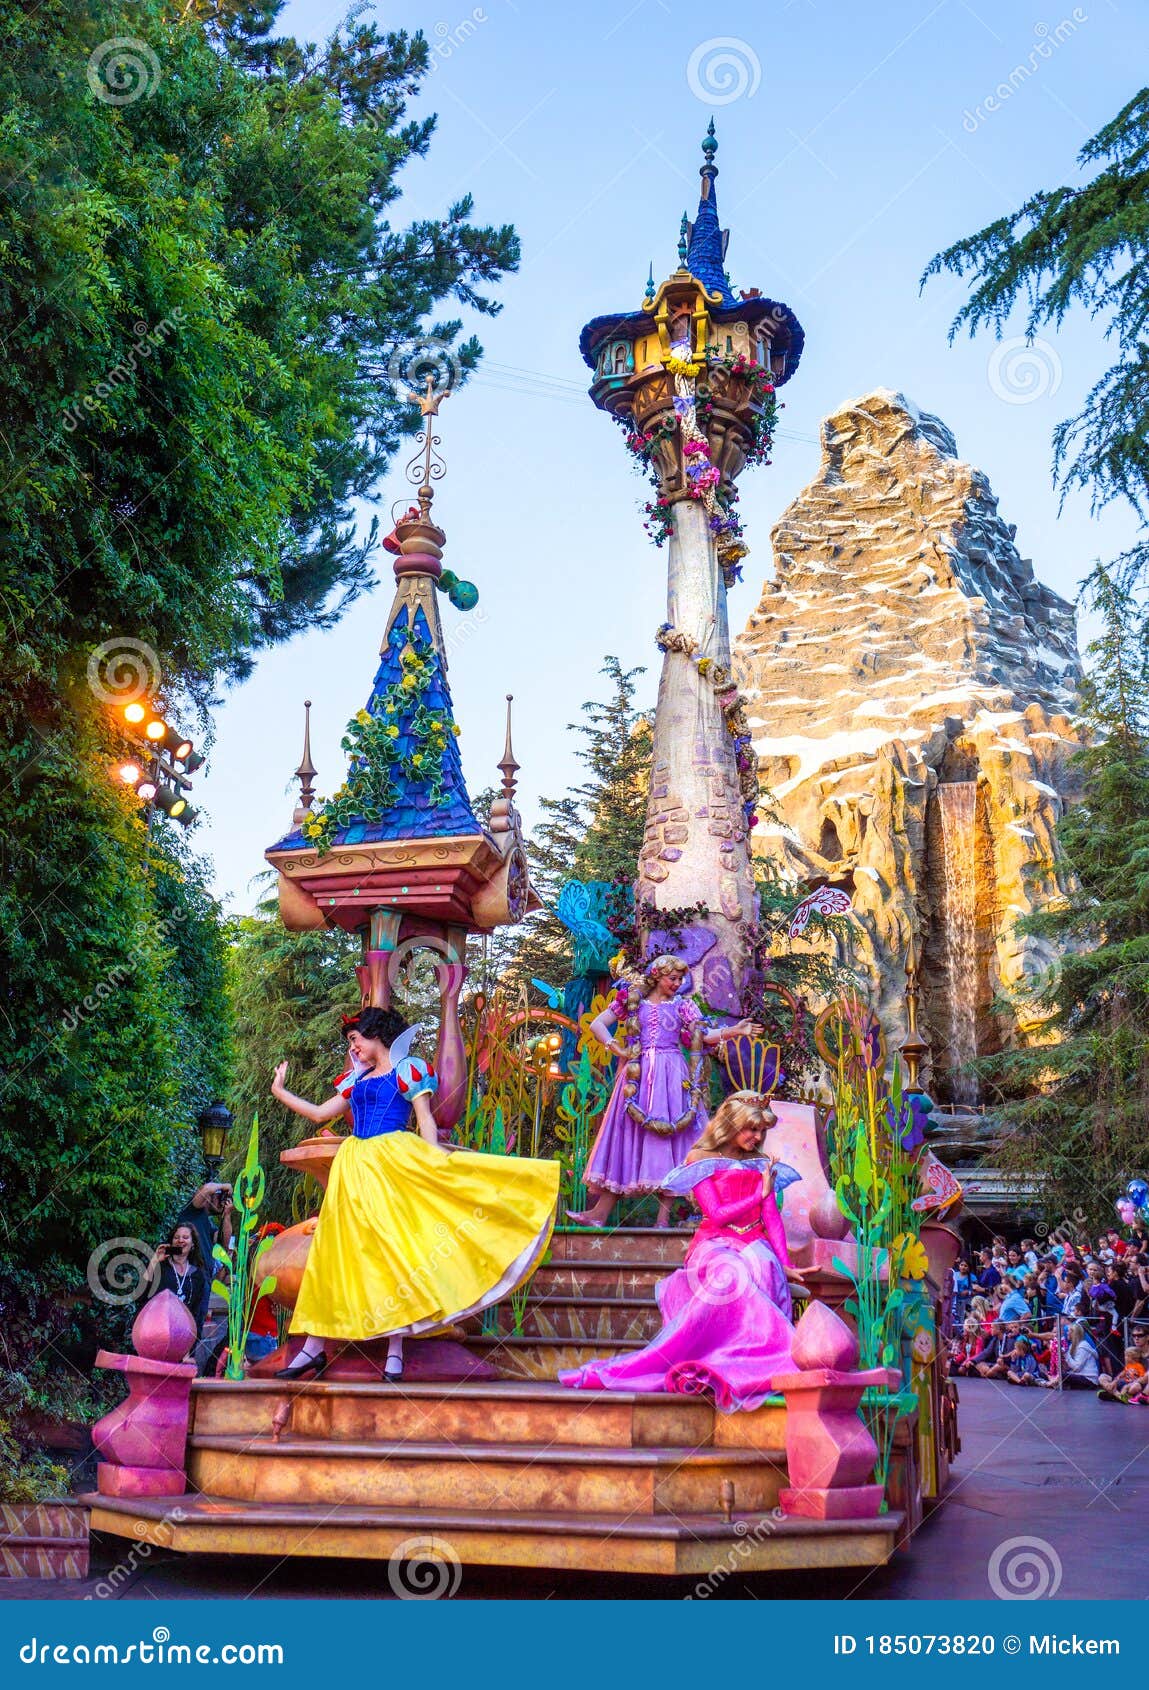 Disneyland Princess Parade Float Editorial Image - Image of california,  disney: 185073820